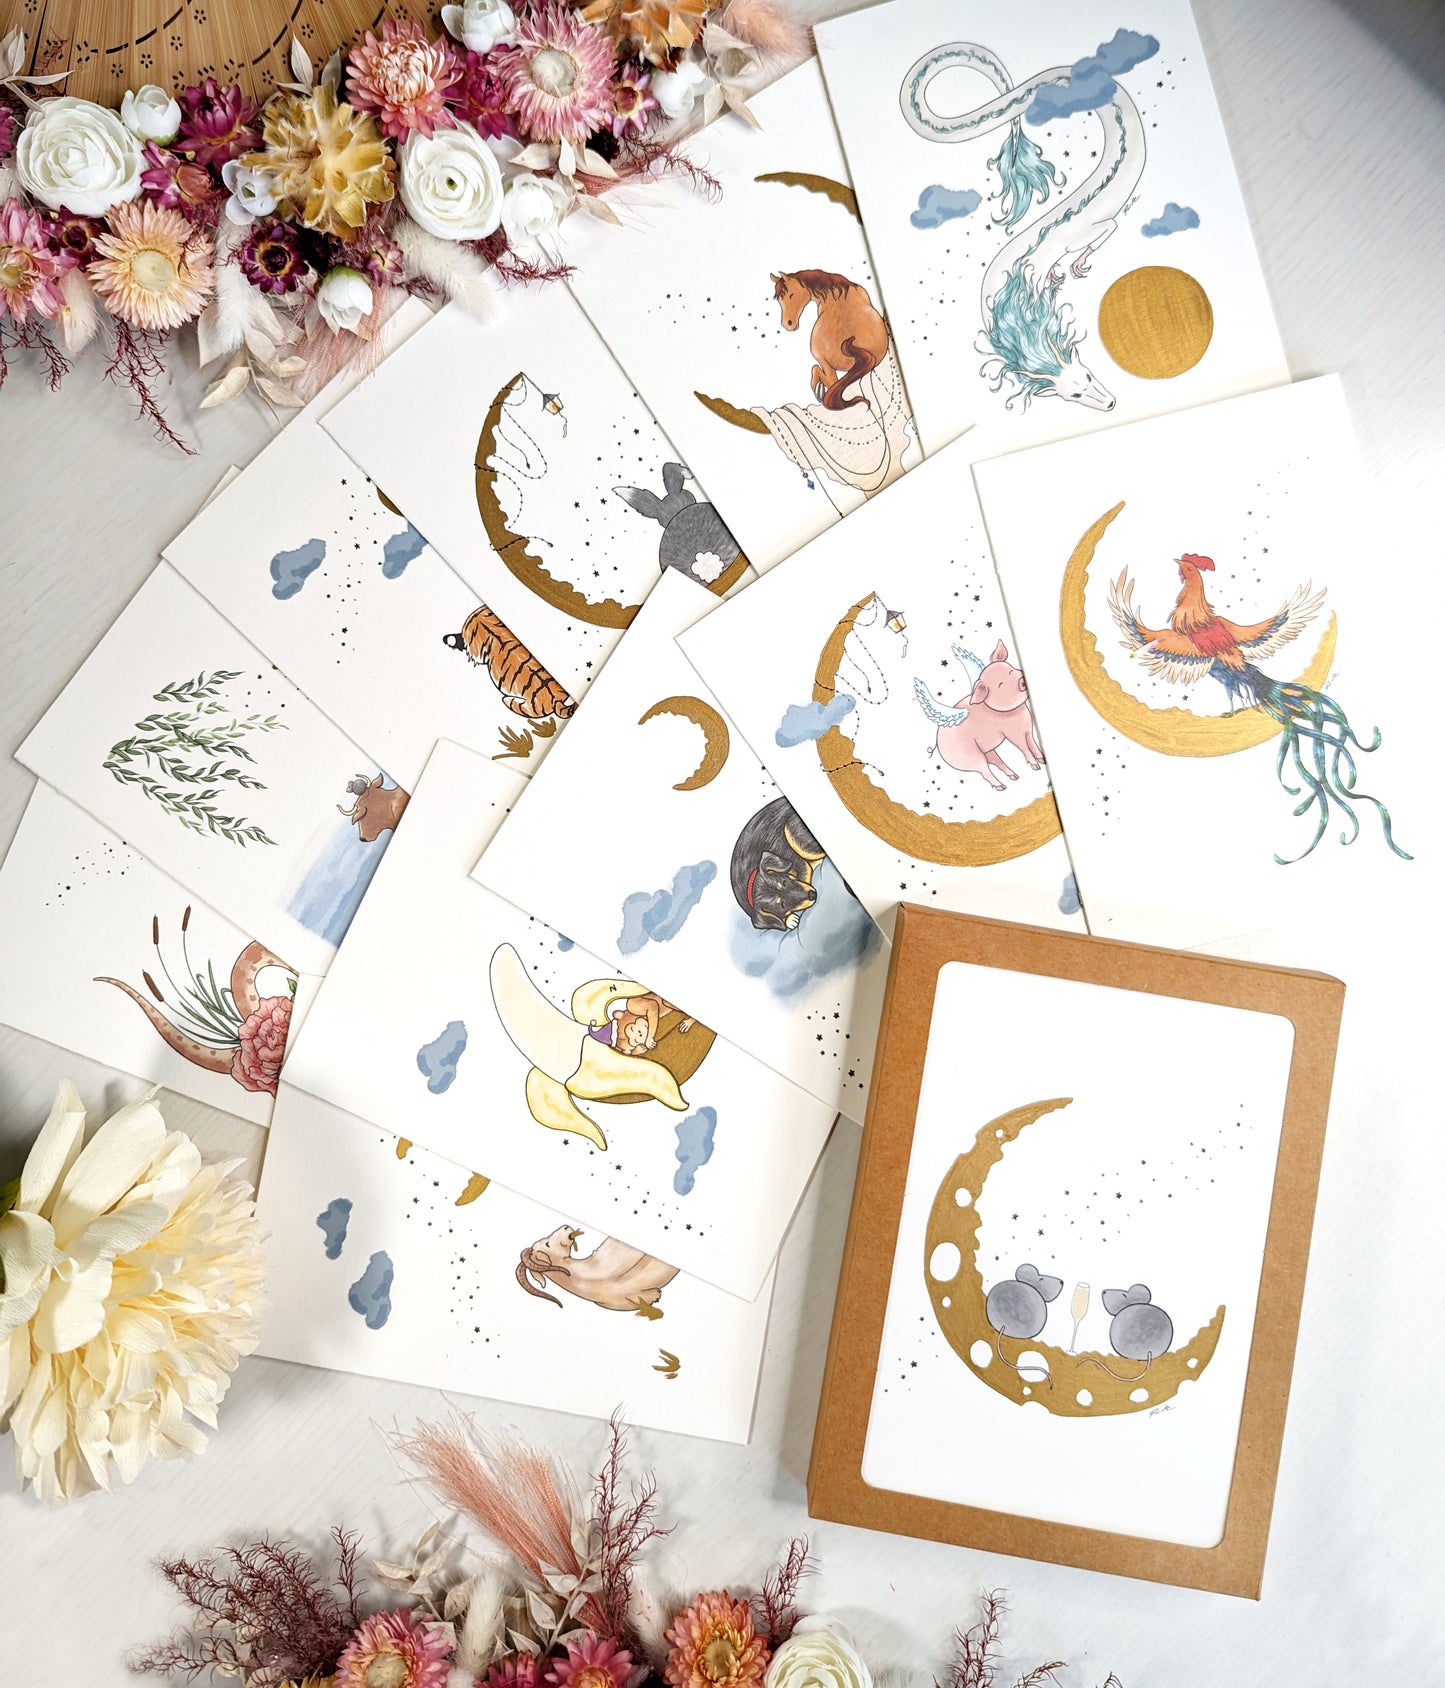 Rooster Greeting Card - Lunar Zodiac Series